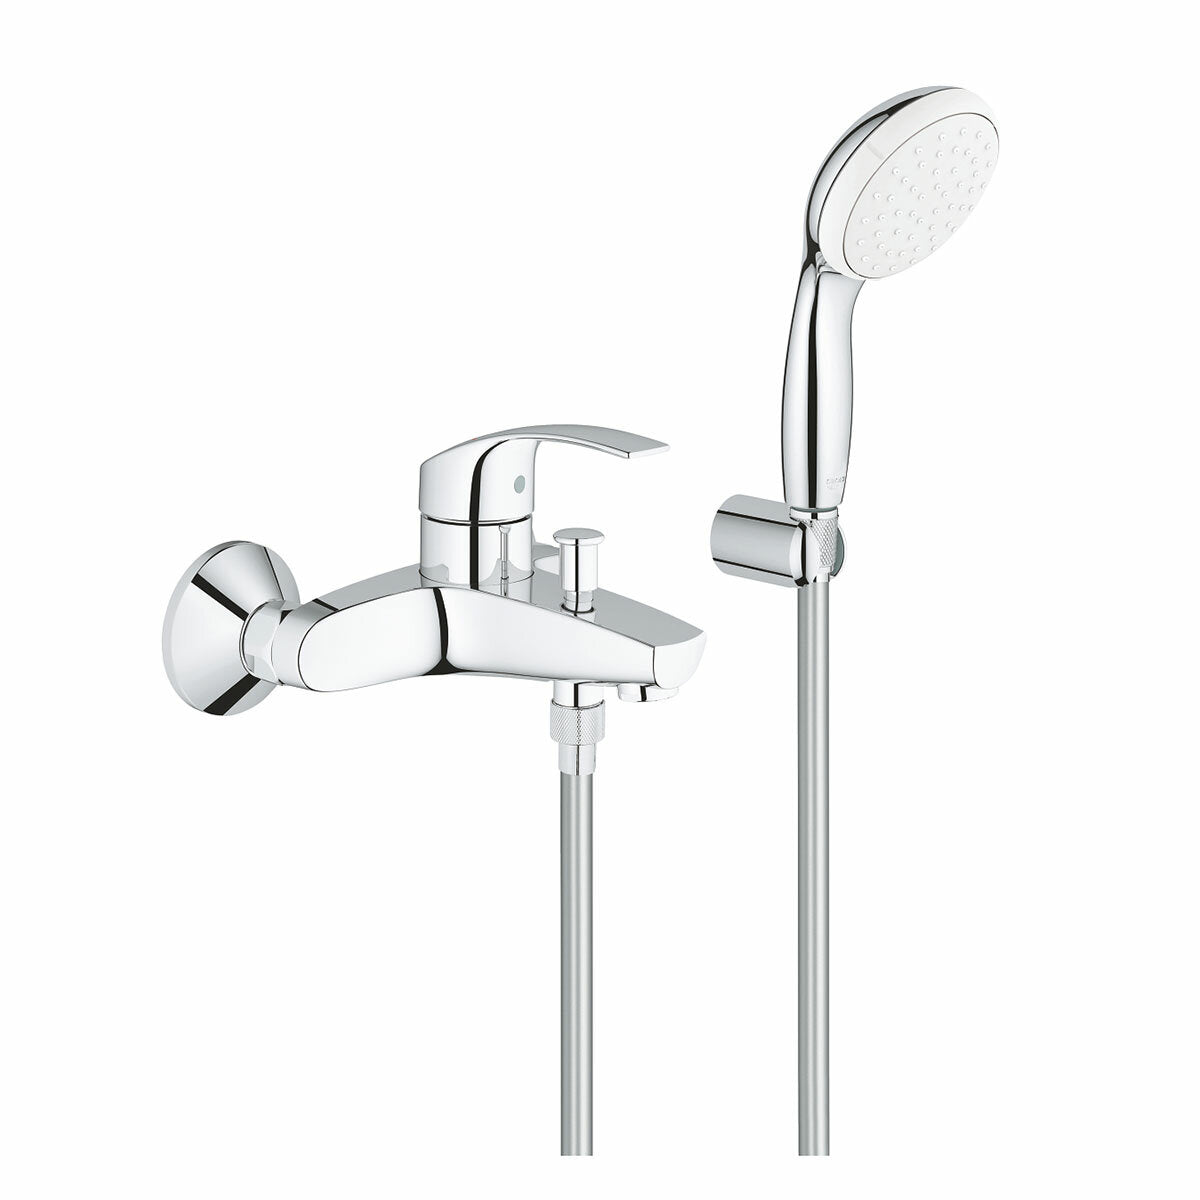 Grohe Eurosmart single lever bath/shower mixer with shower set